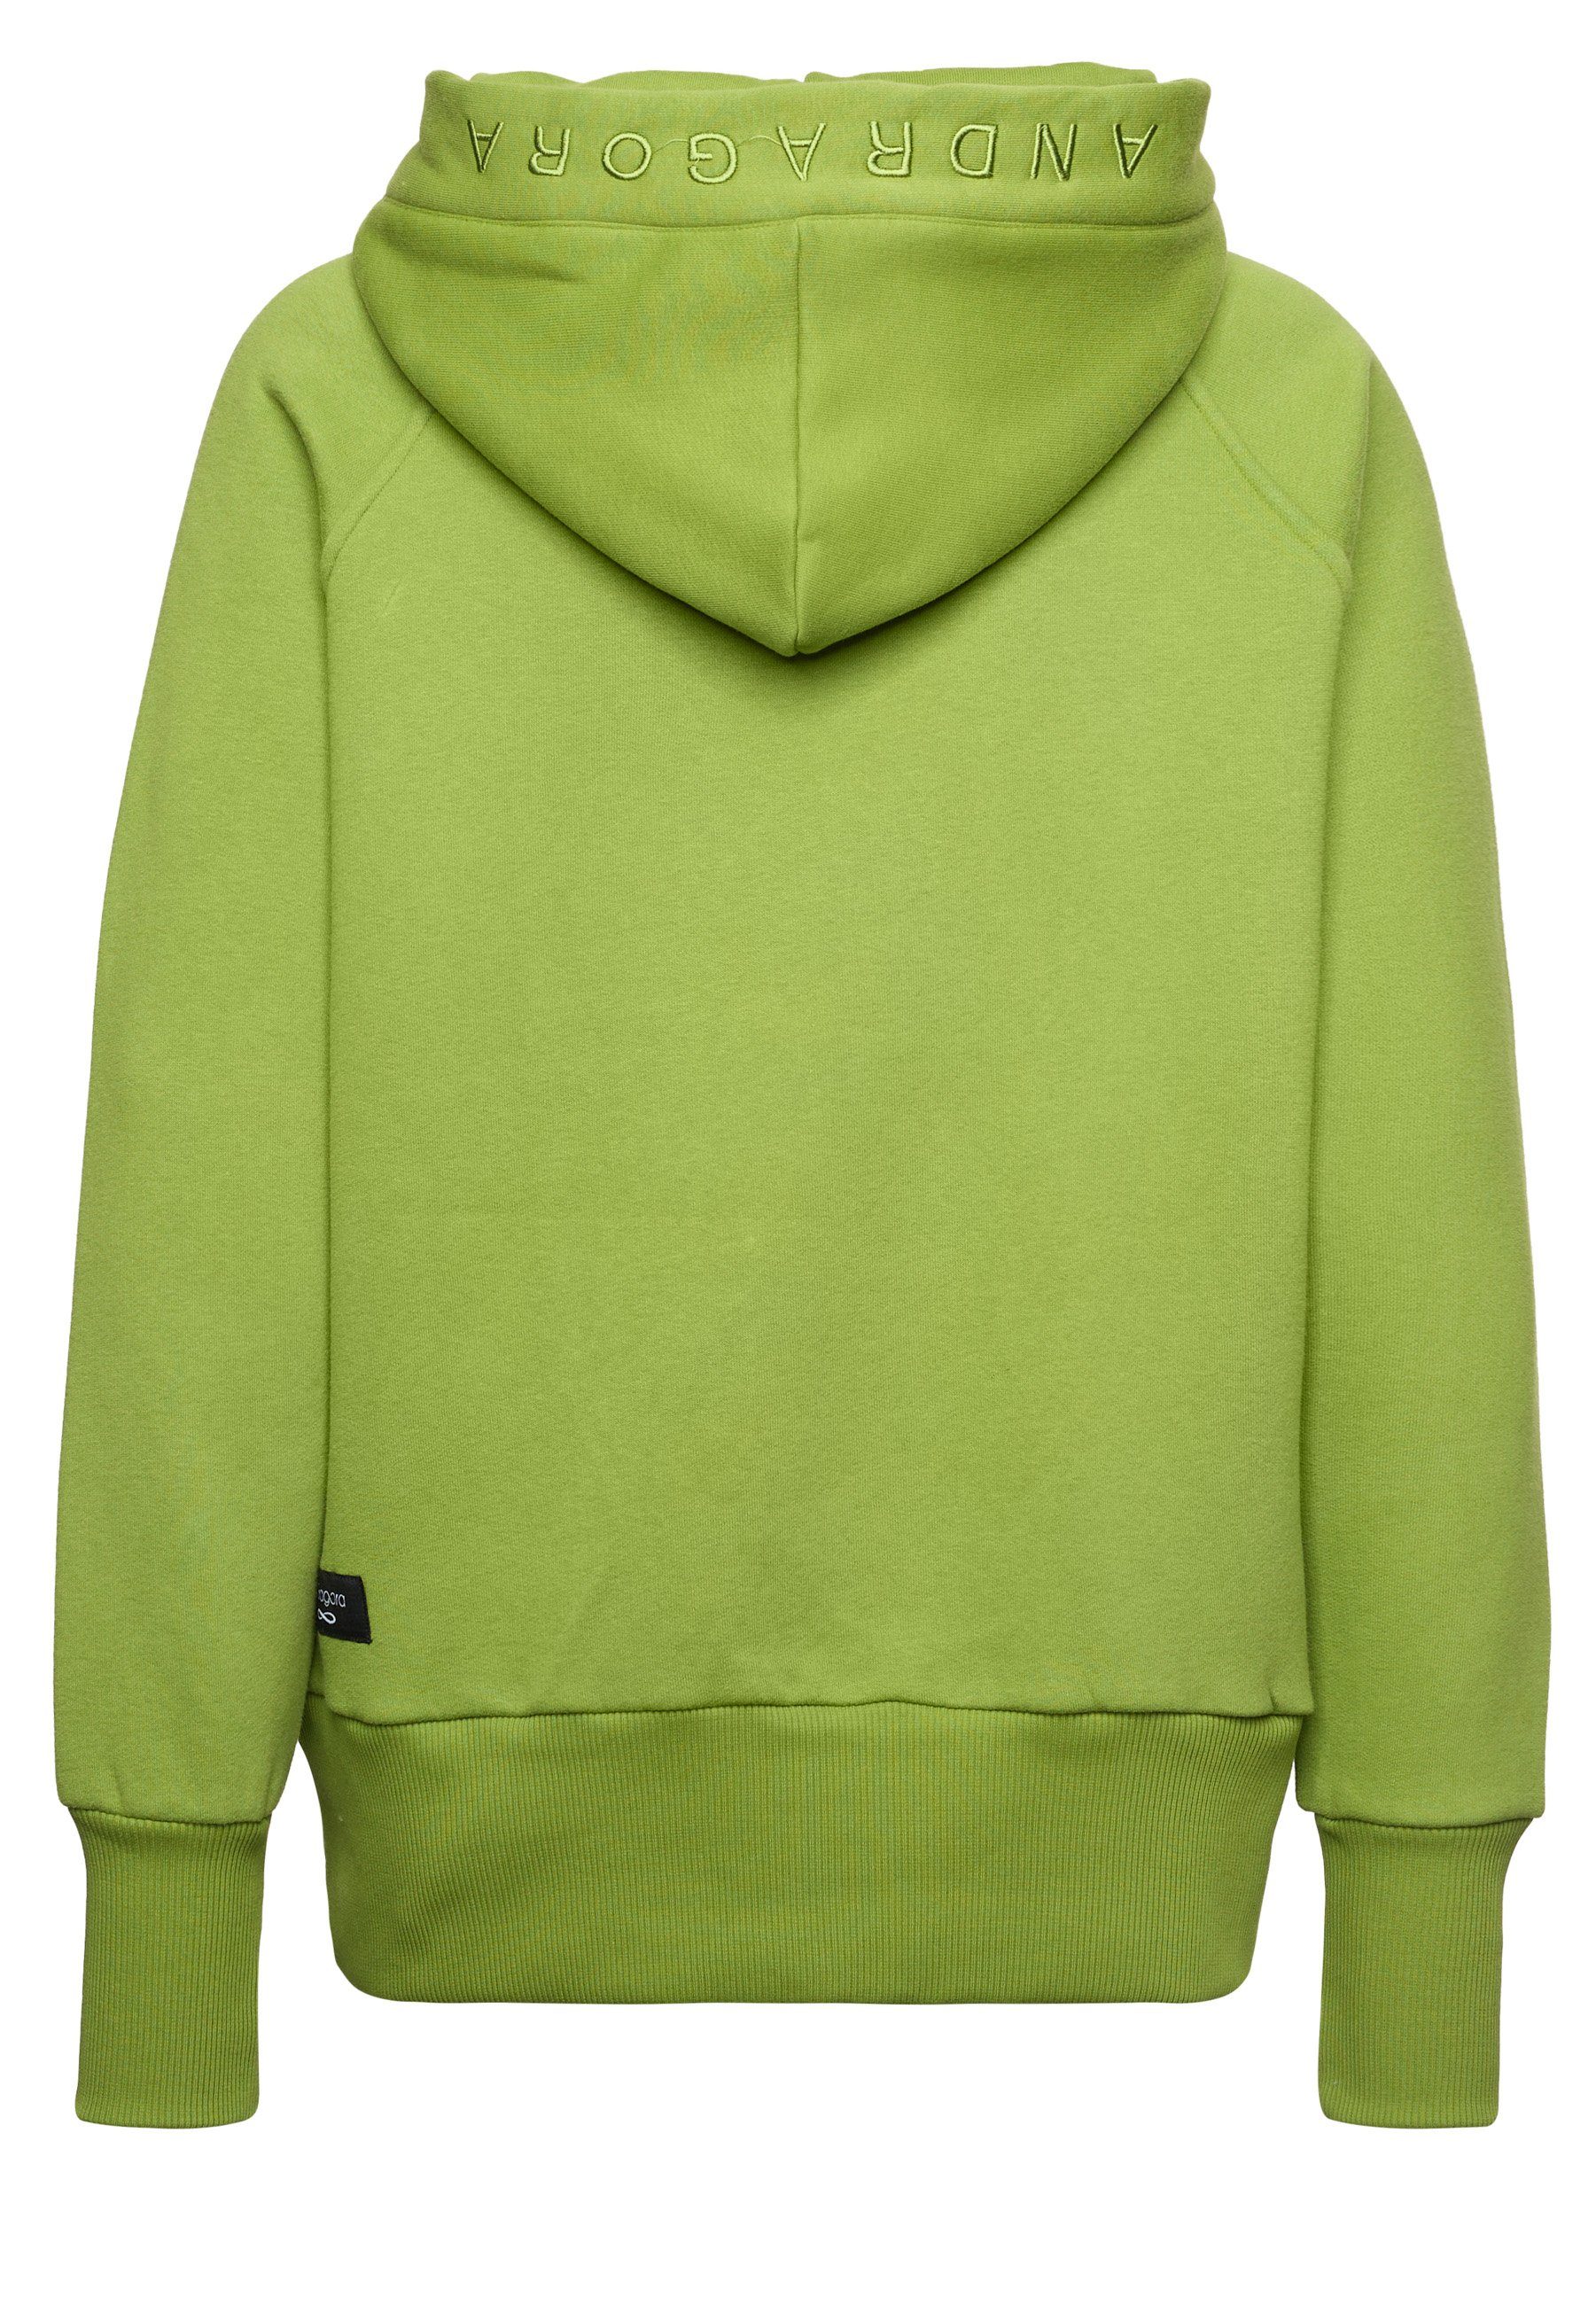 Decay Kapuzensweatshirt mit dezentem Frontprint olivgrün-grün